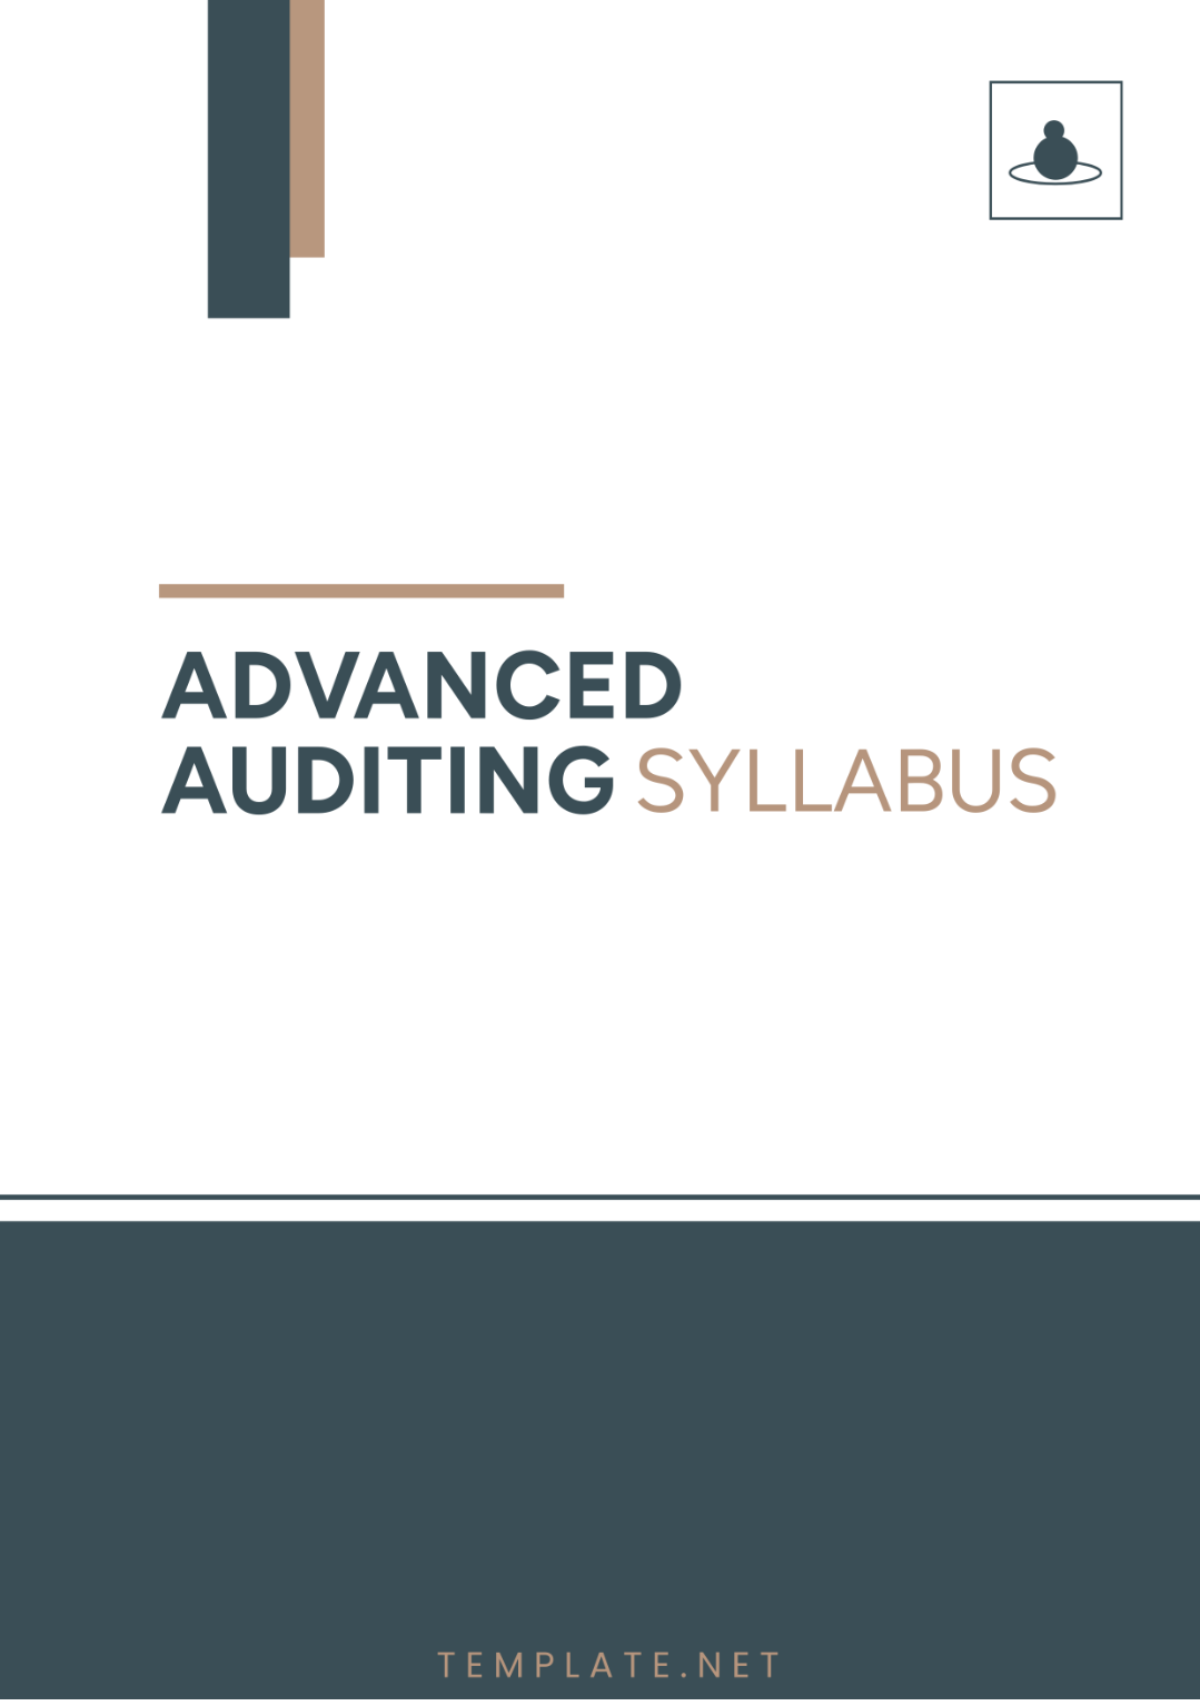 Advanced Auditing Syllabus Template